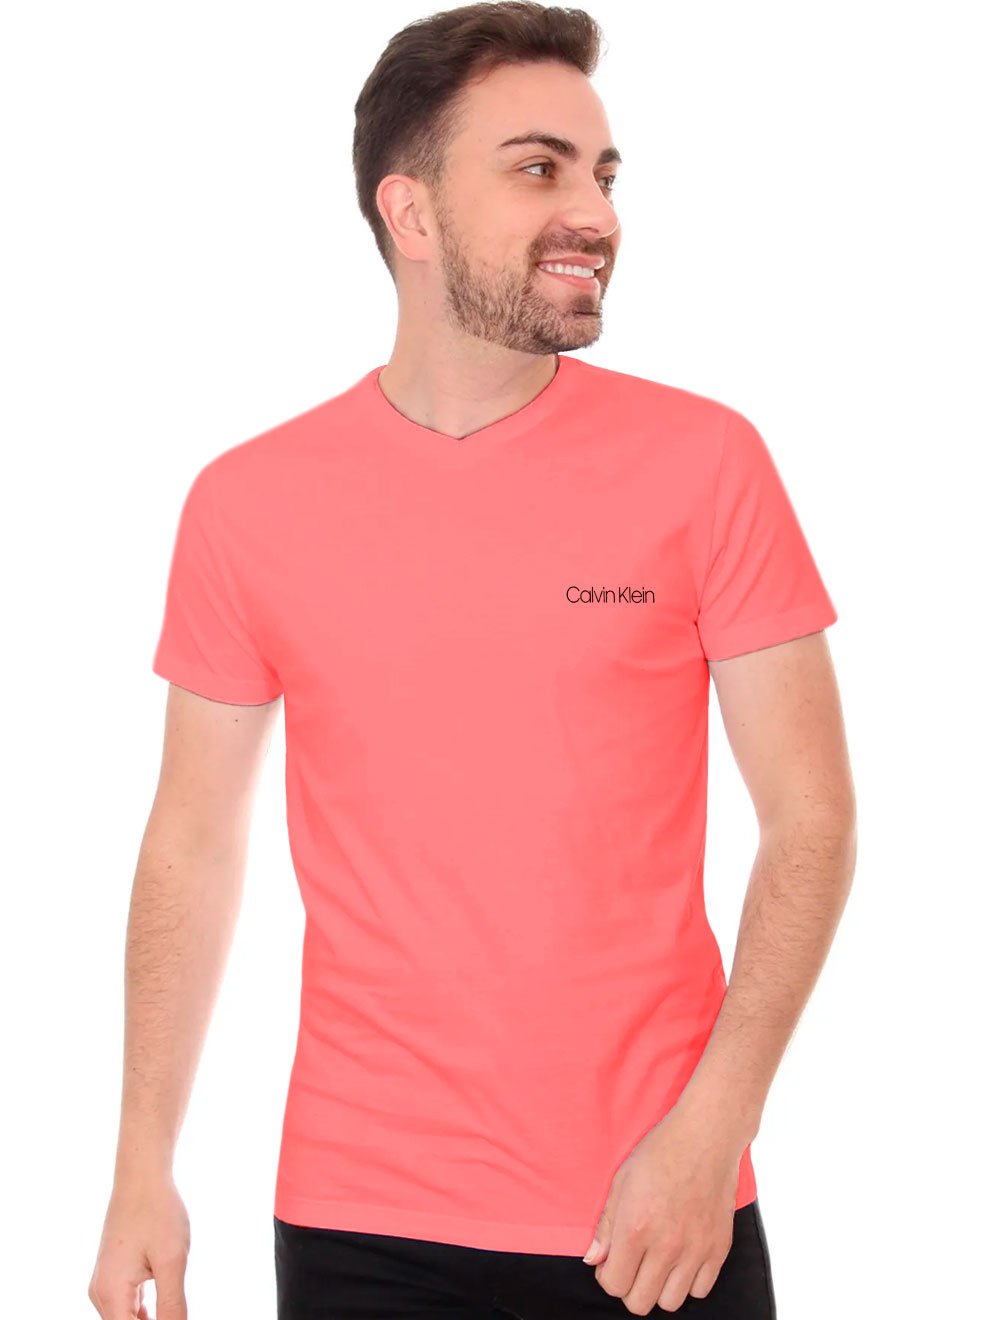 Camiseta Calvin Klein Swimwear Masculina V-Neck Slim Fit Logo Vermelha Coral